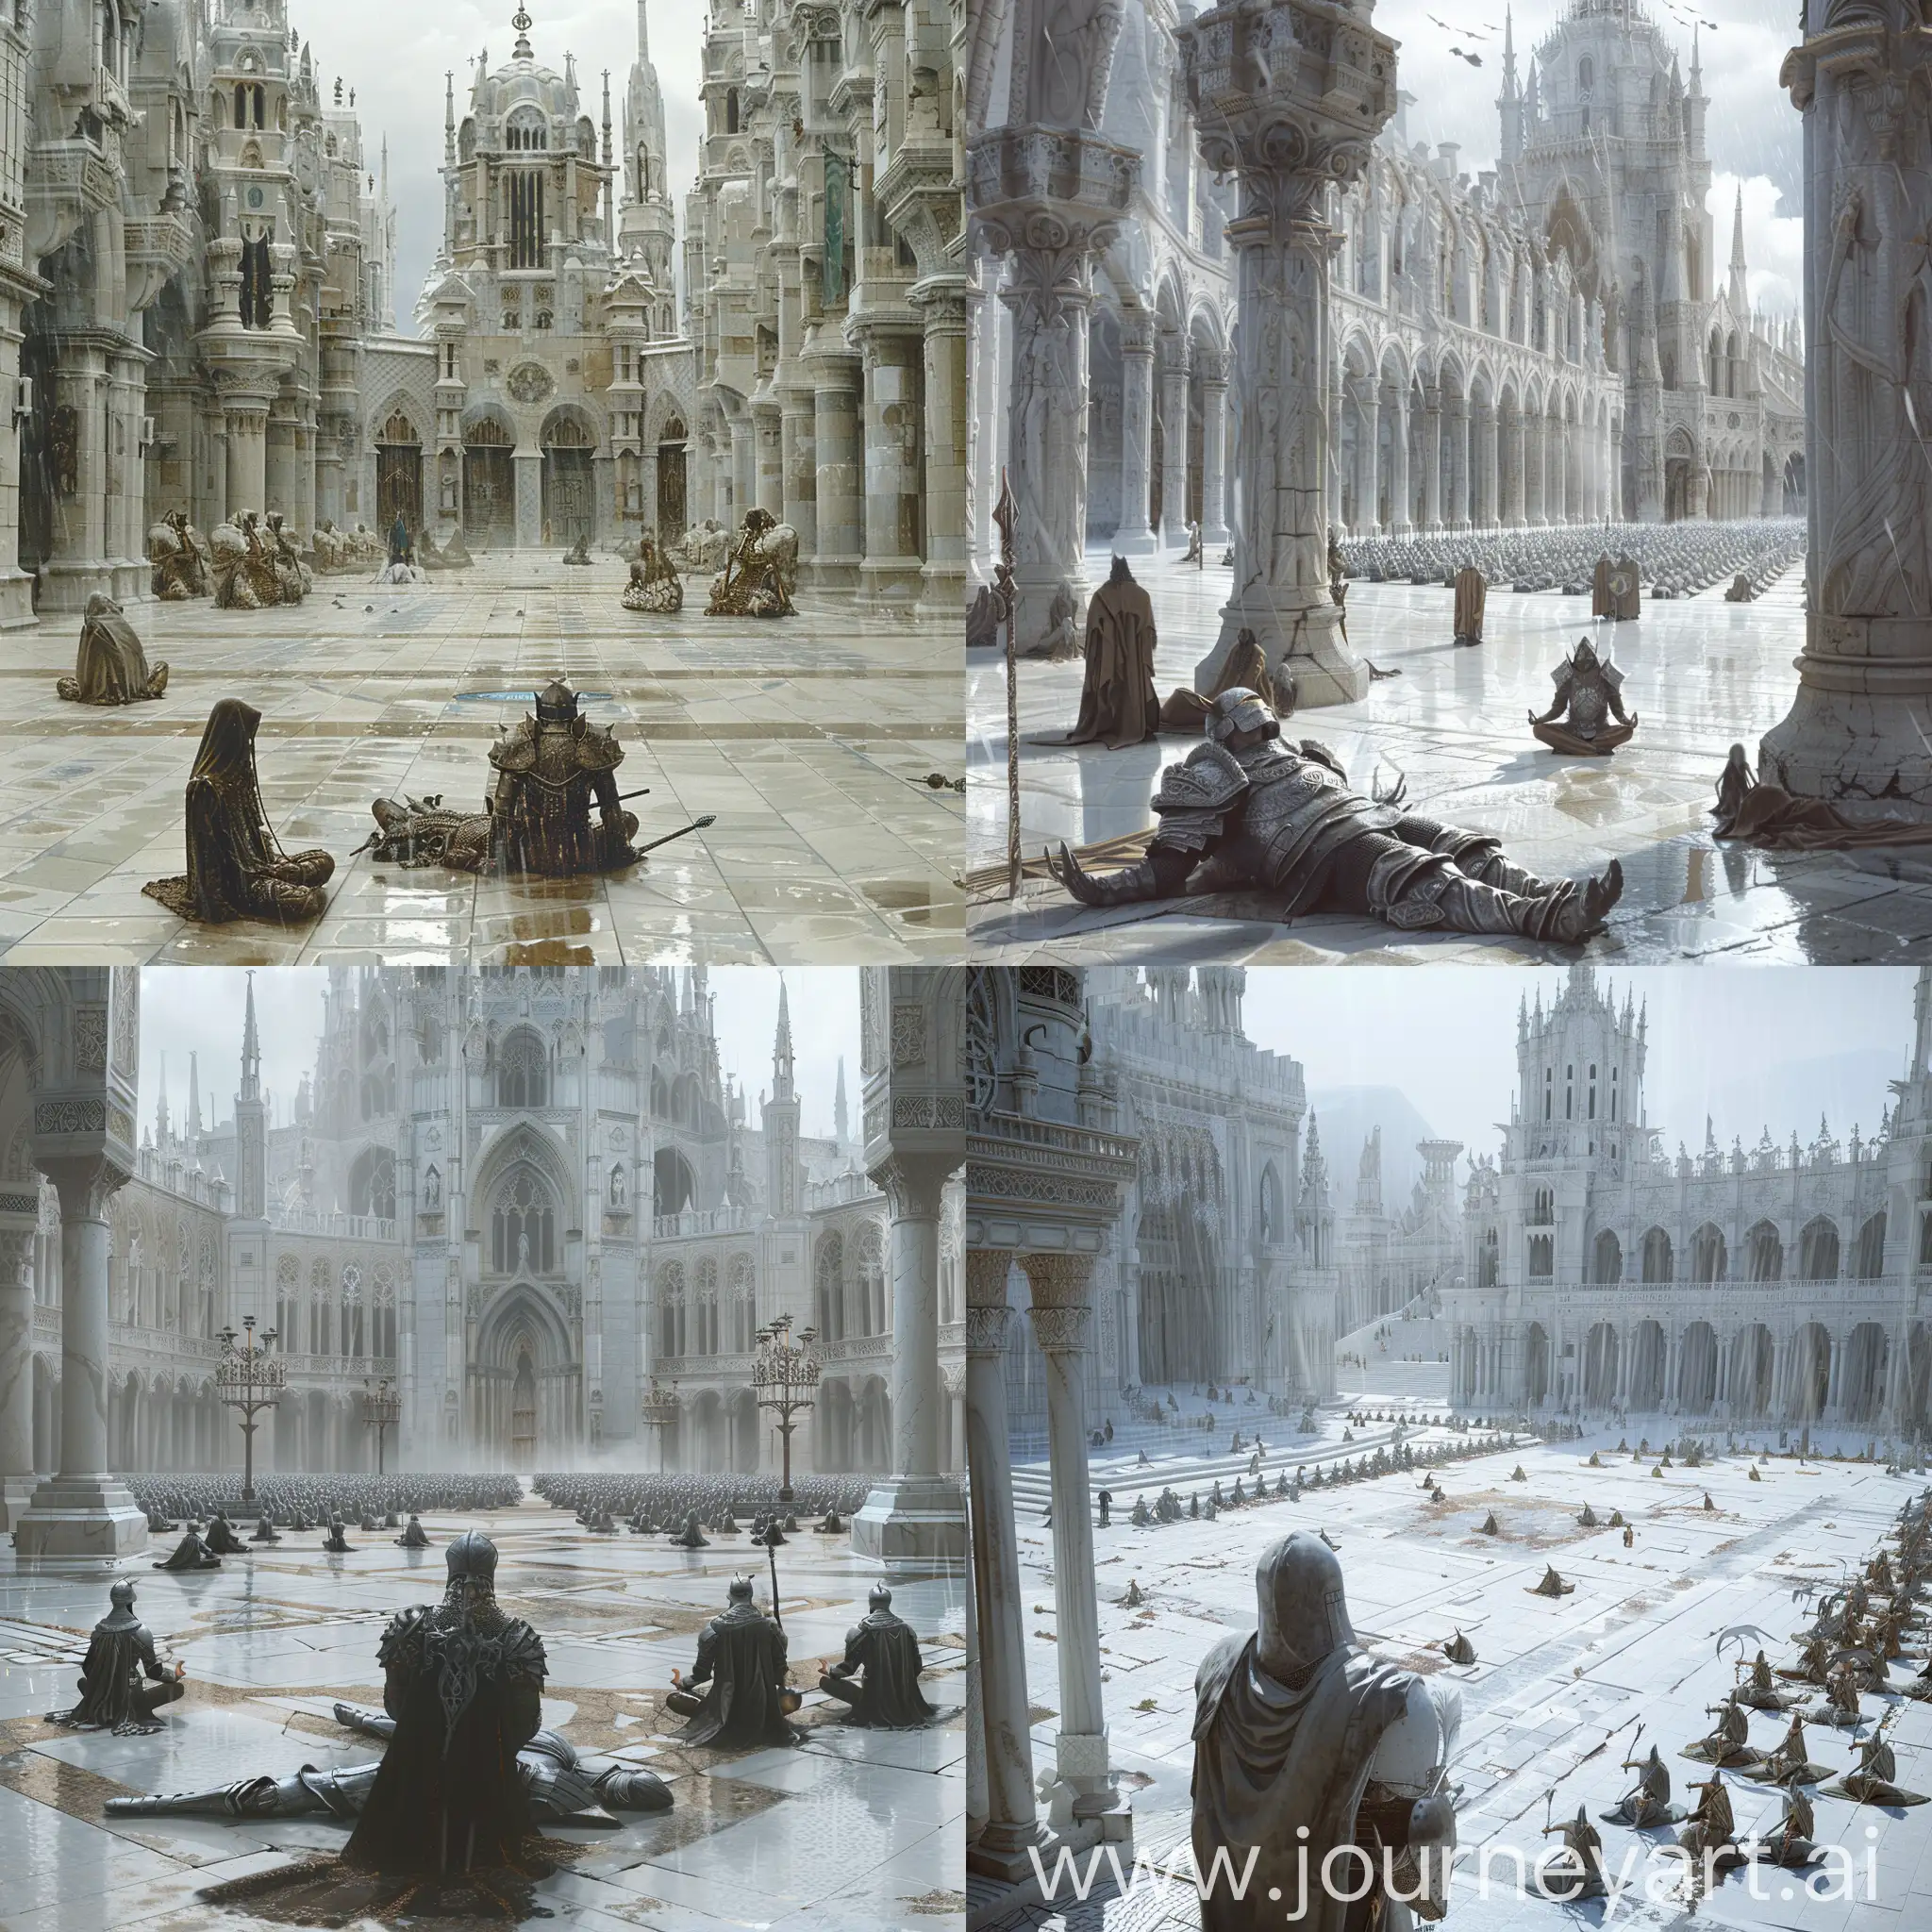 Meditating-Elves-Surround-Fallen-Warrior-in-Gothic-City-Square